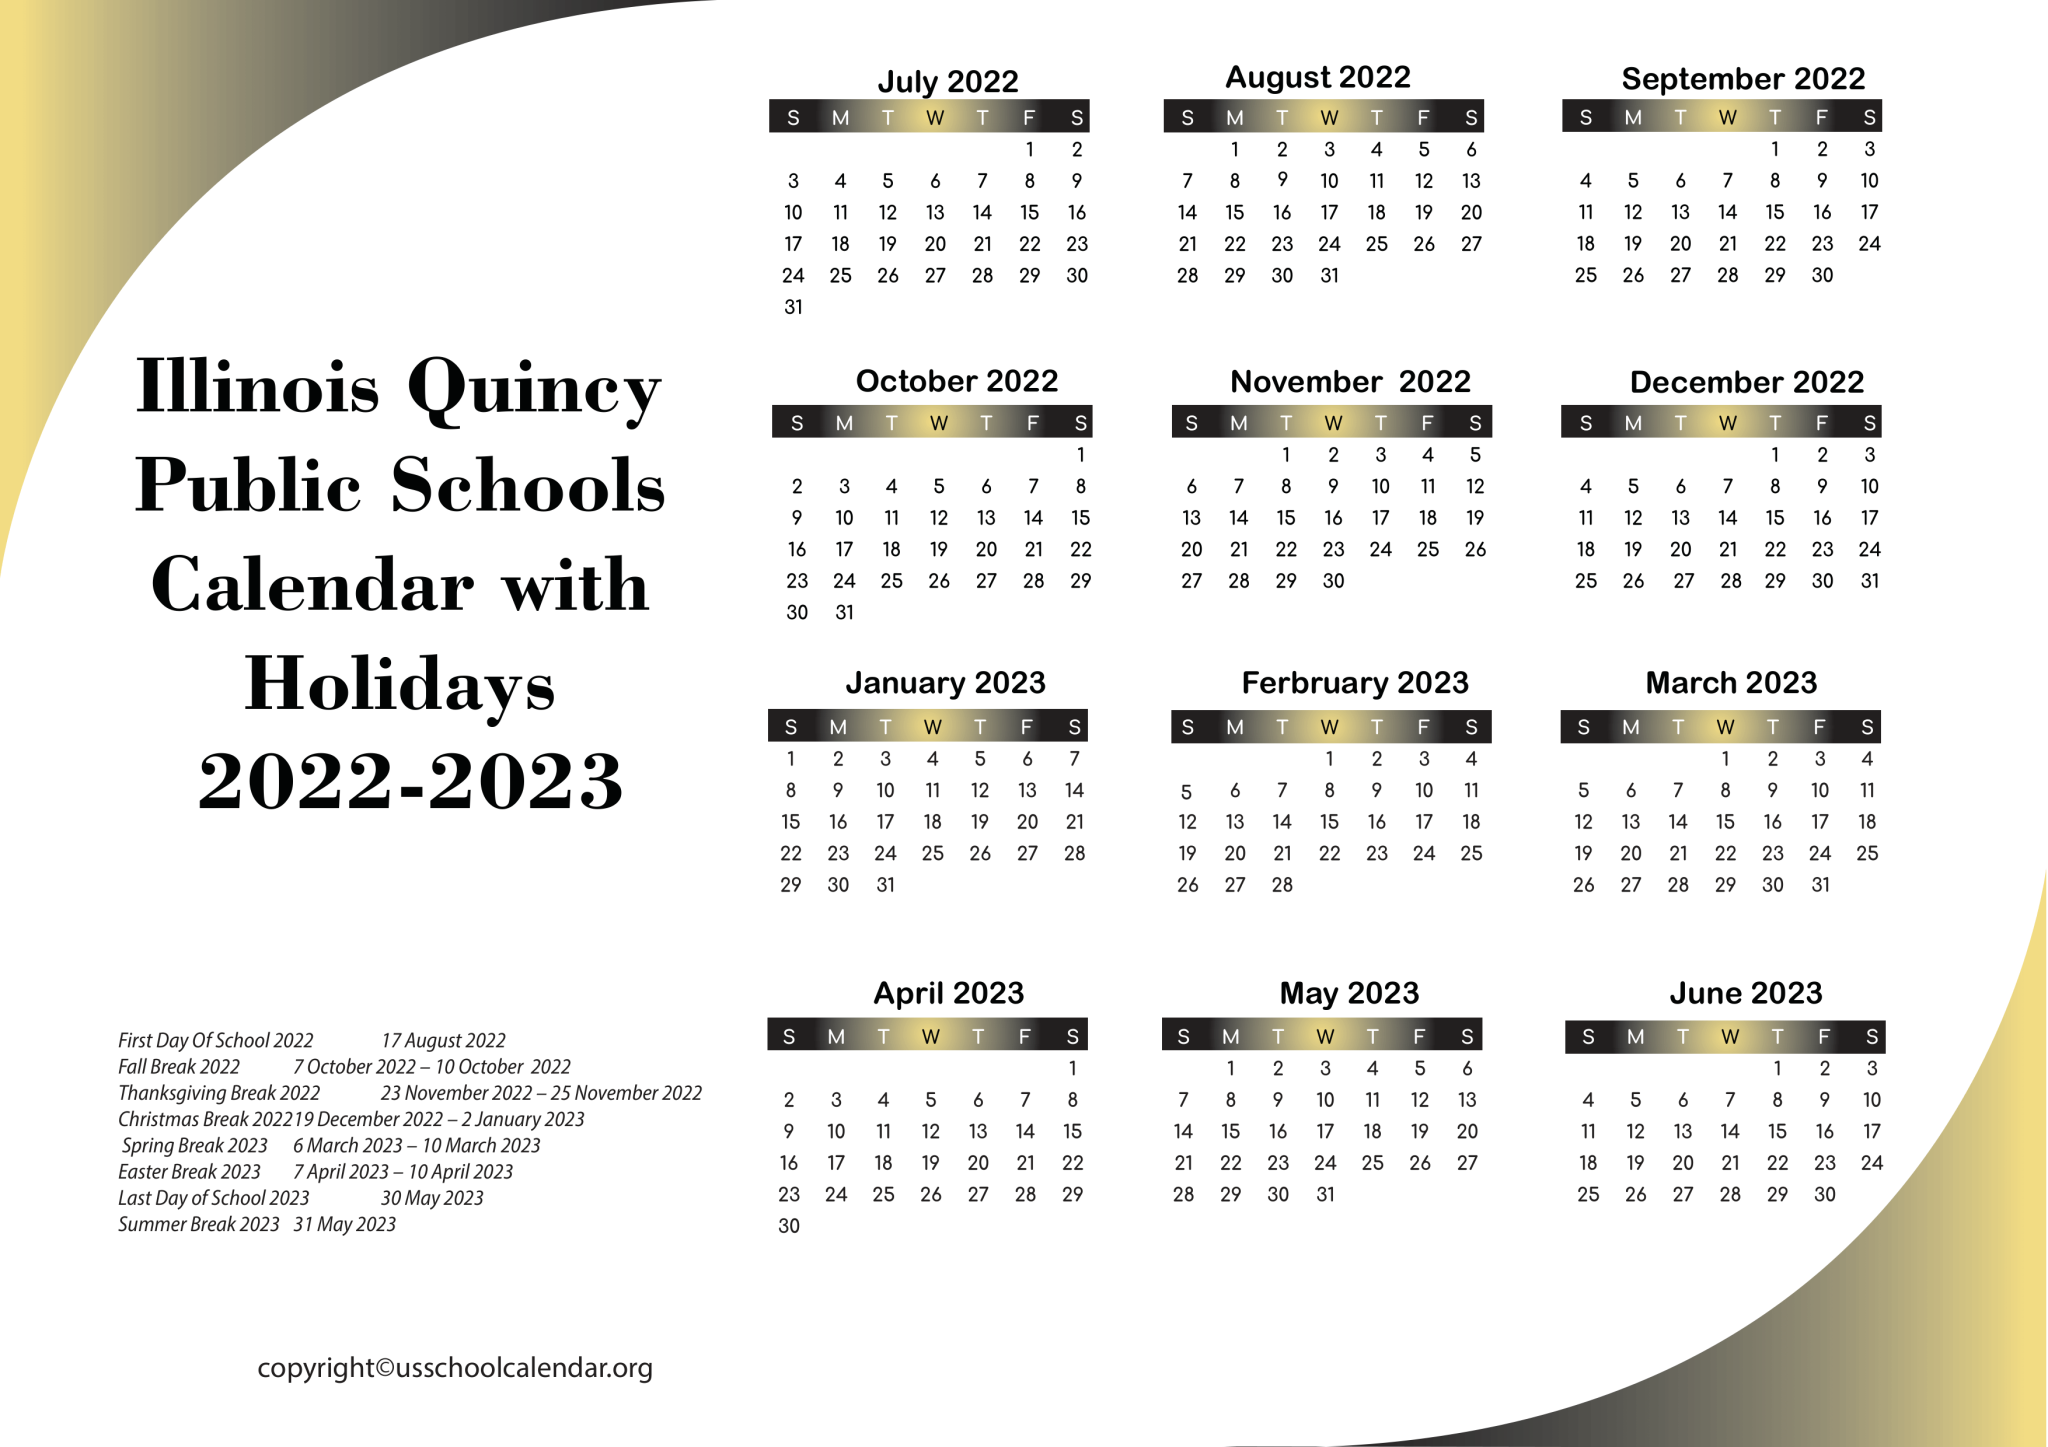 illinois-quincy-public-schools-calendar-with-holidays-2022-2023